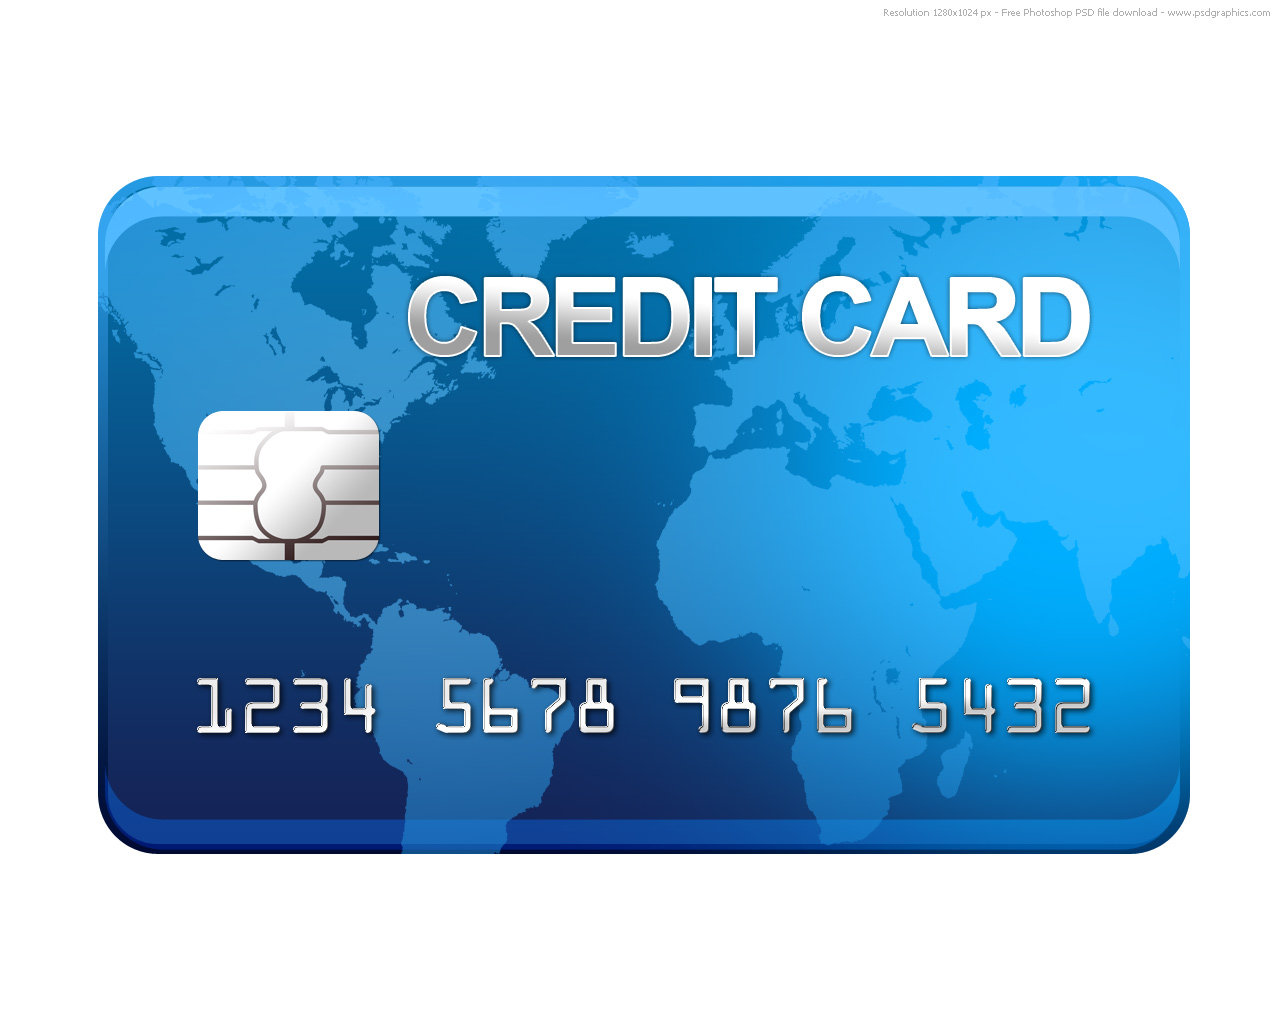 credit card mantras